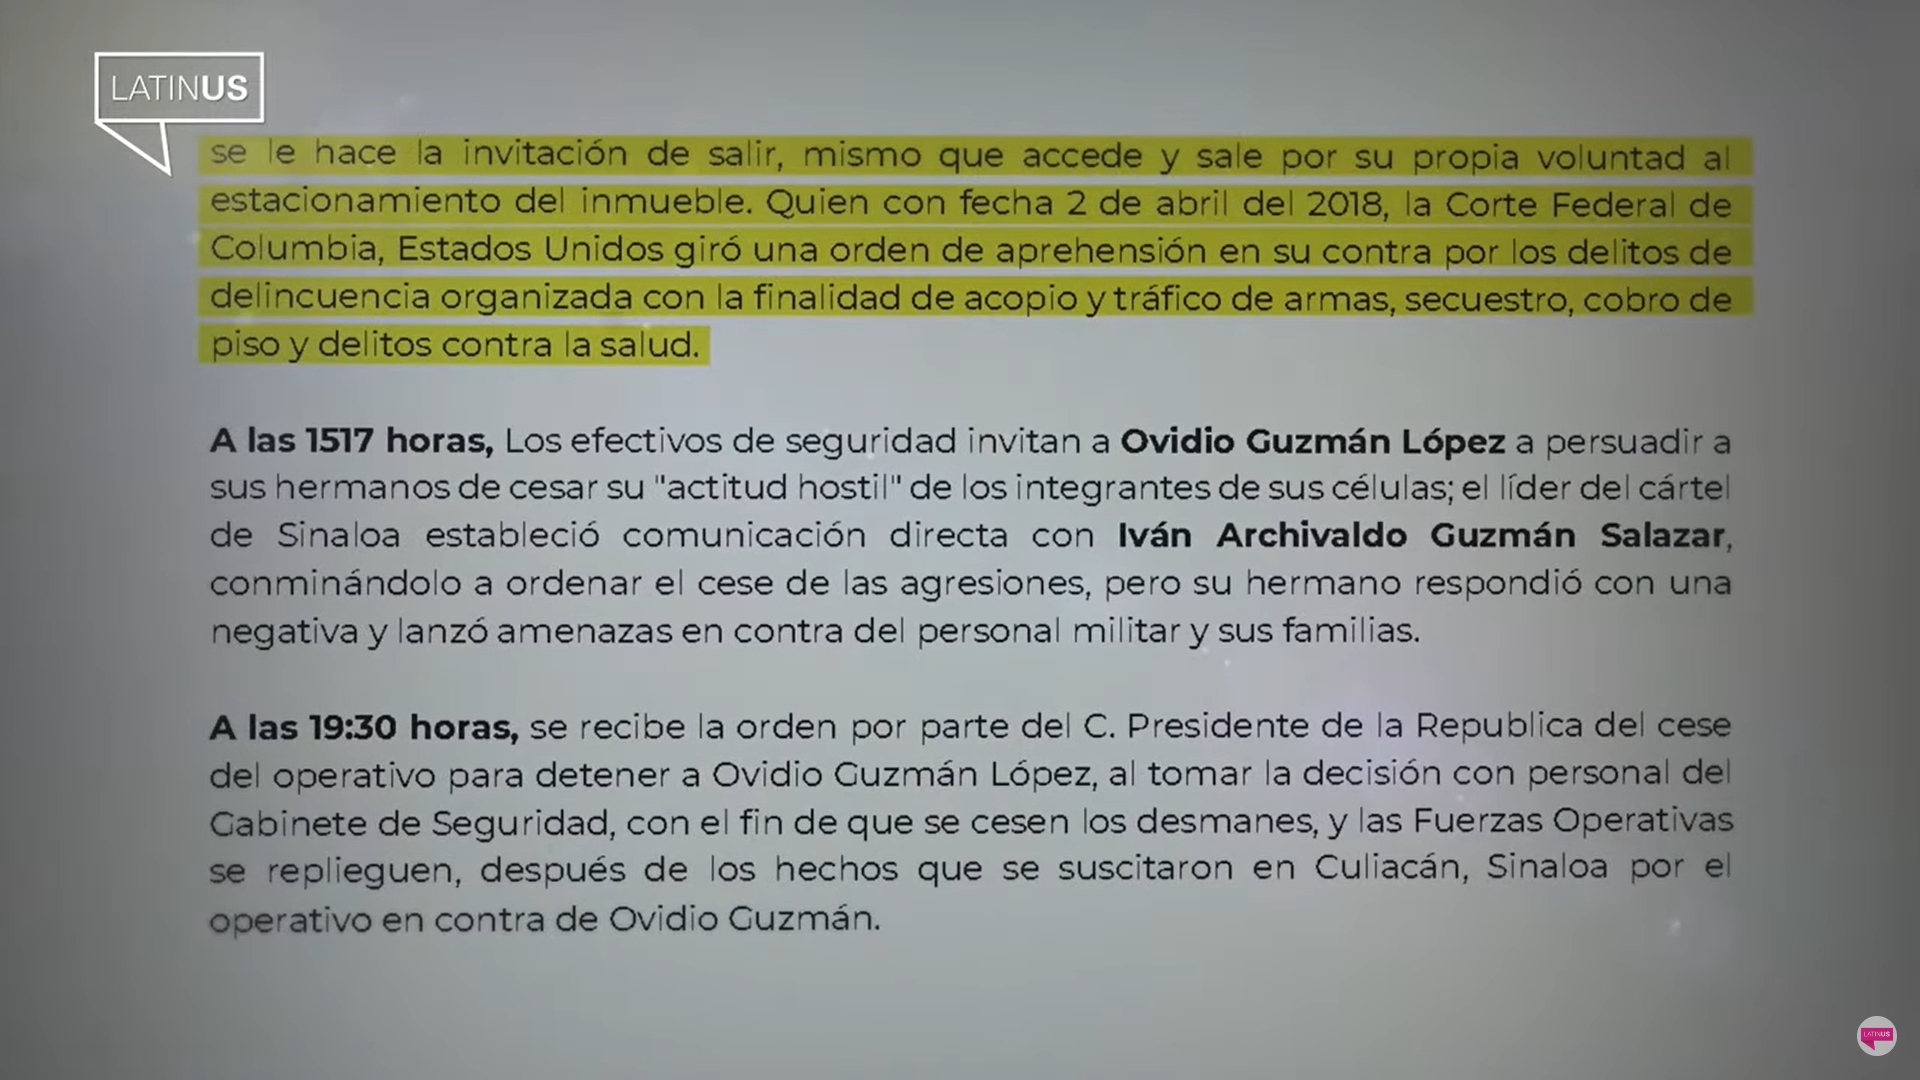 La narrativa del caos en Sinaloa fue una especie de ejemplo sobre los informes sensibles de seguridad (Foto: Captura de pantalla/Latinus)